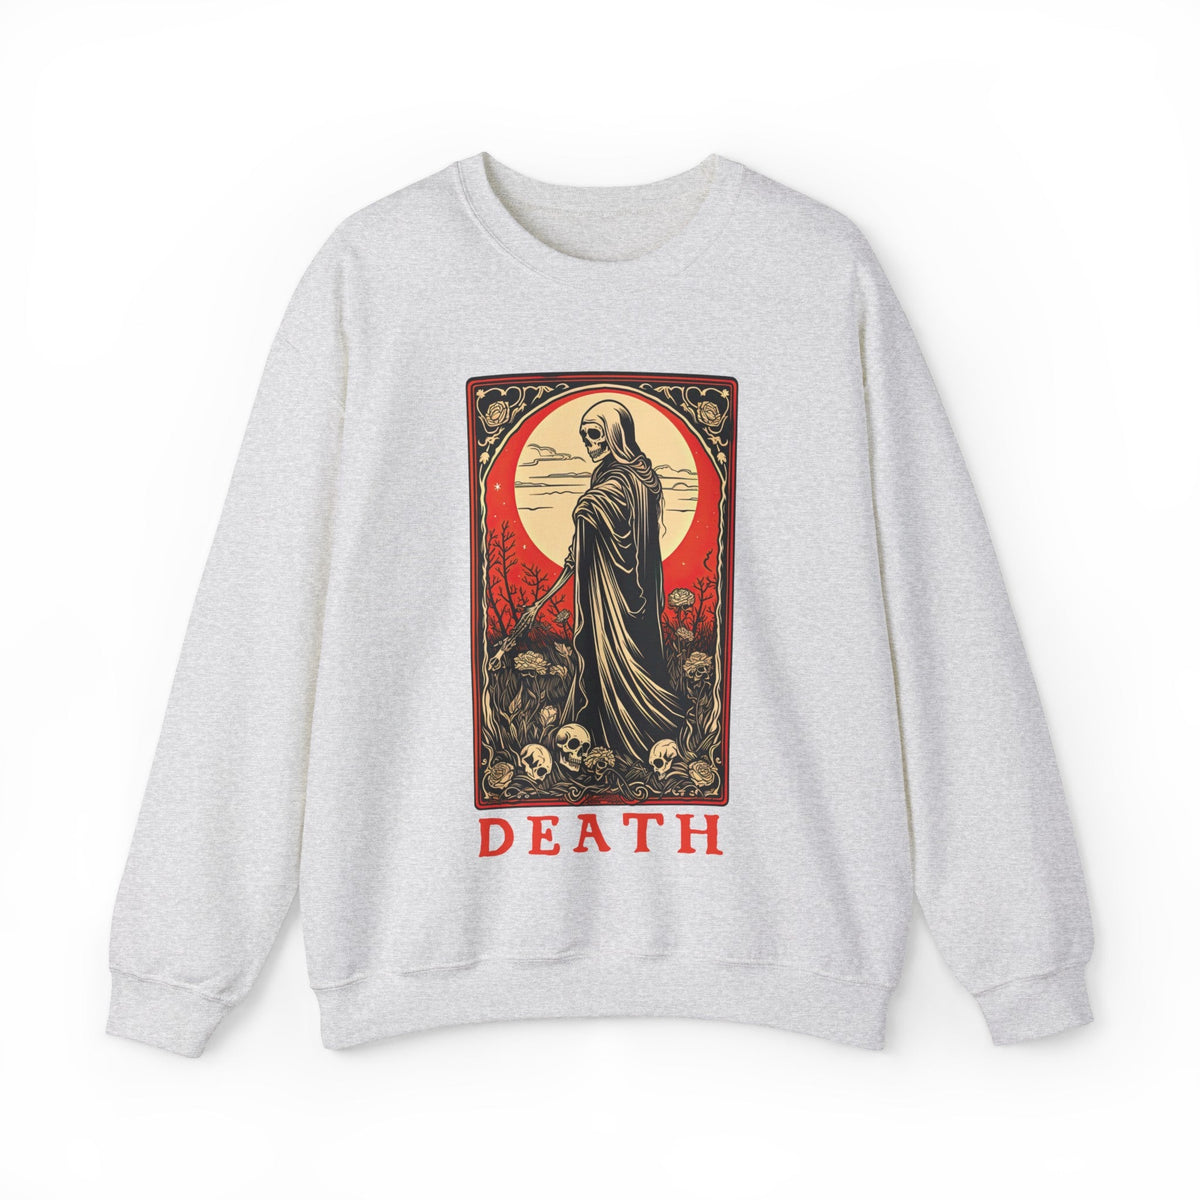 Death Tarot Card Skeleton Crew Neck Sweatshirt - Goth Cloth Co.Sweatshirt22104112665423716489